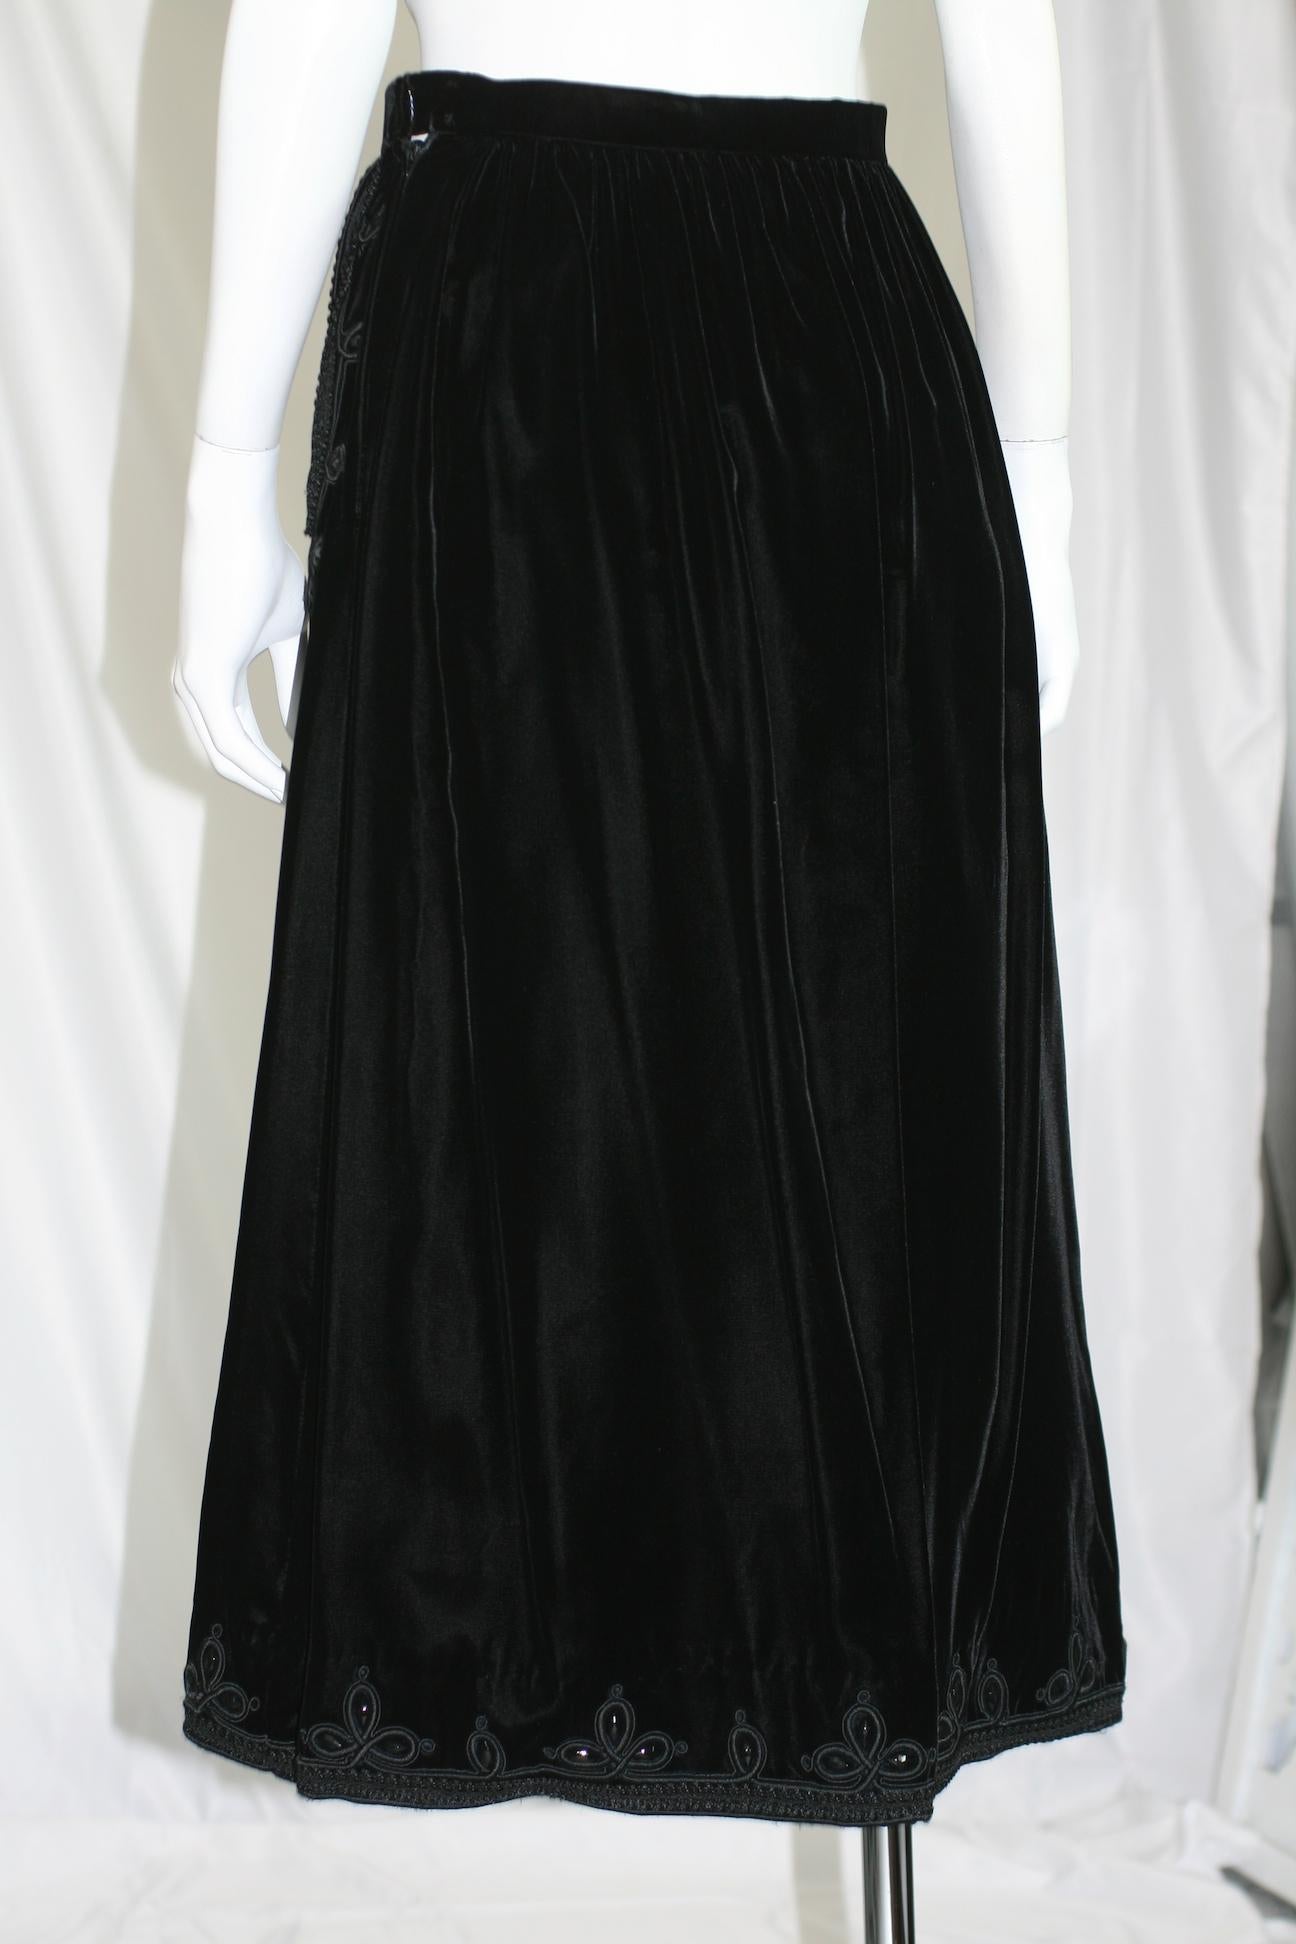 Oscar de la Renta Hussar Style Velvet Skirt In Excellent Condition For Sale In New York, NY